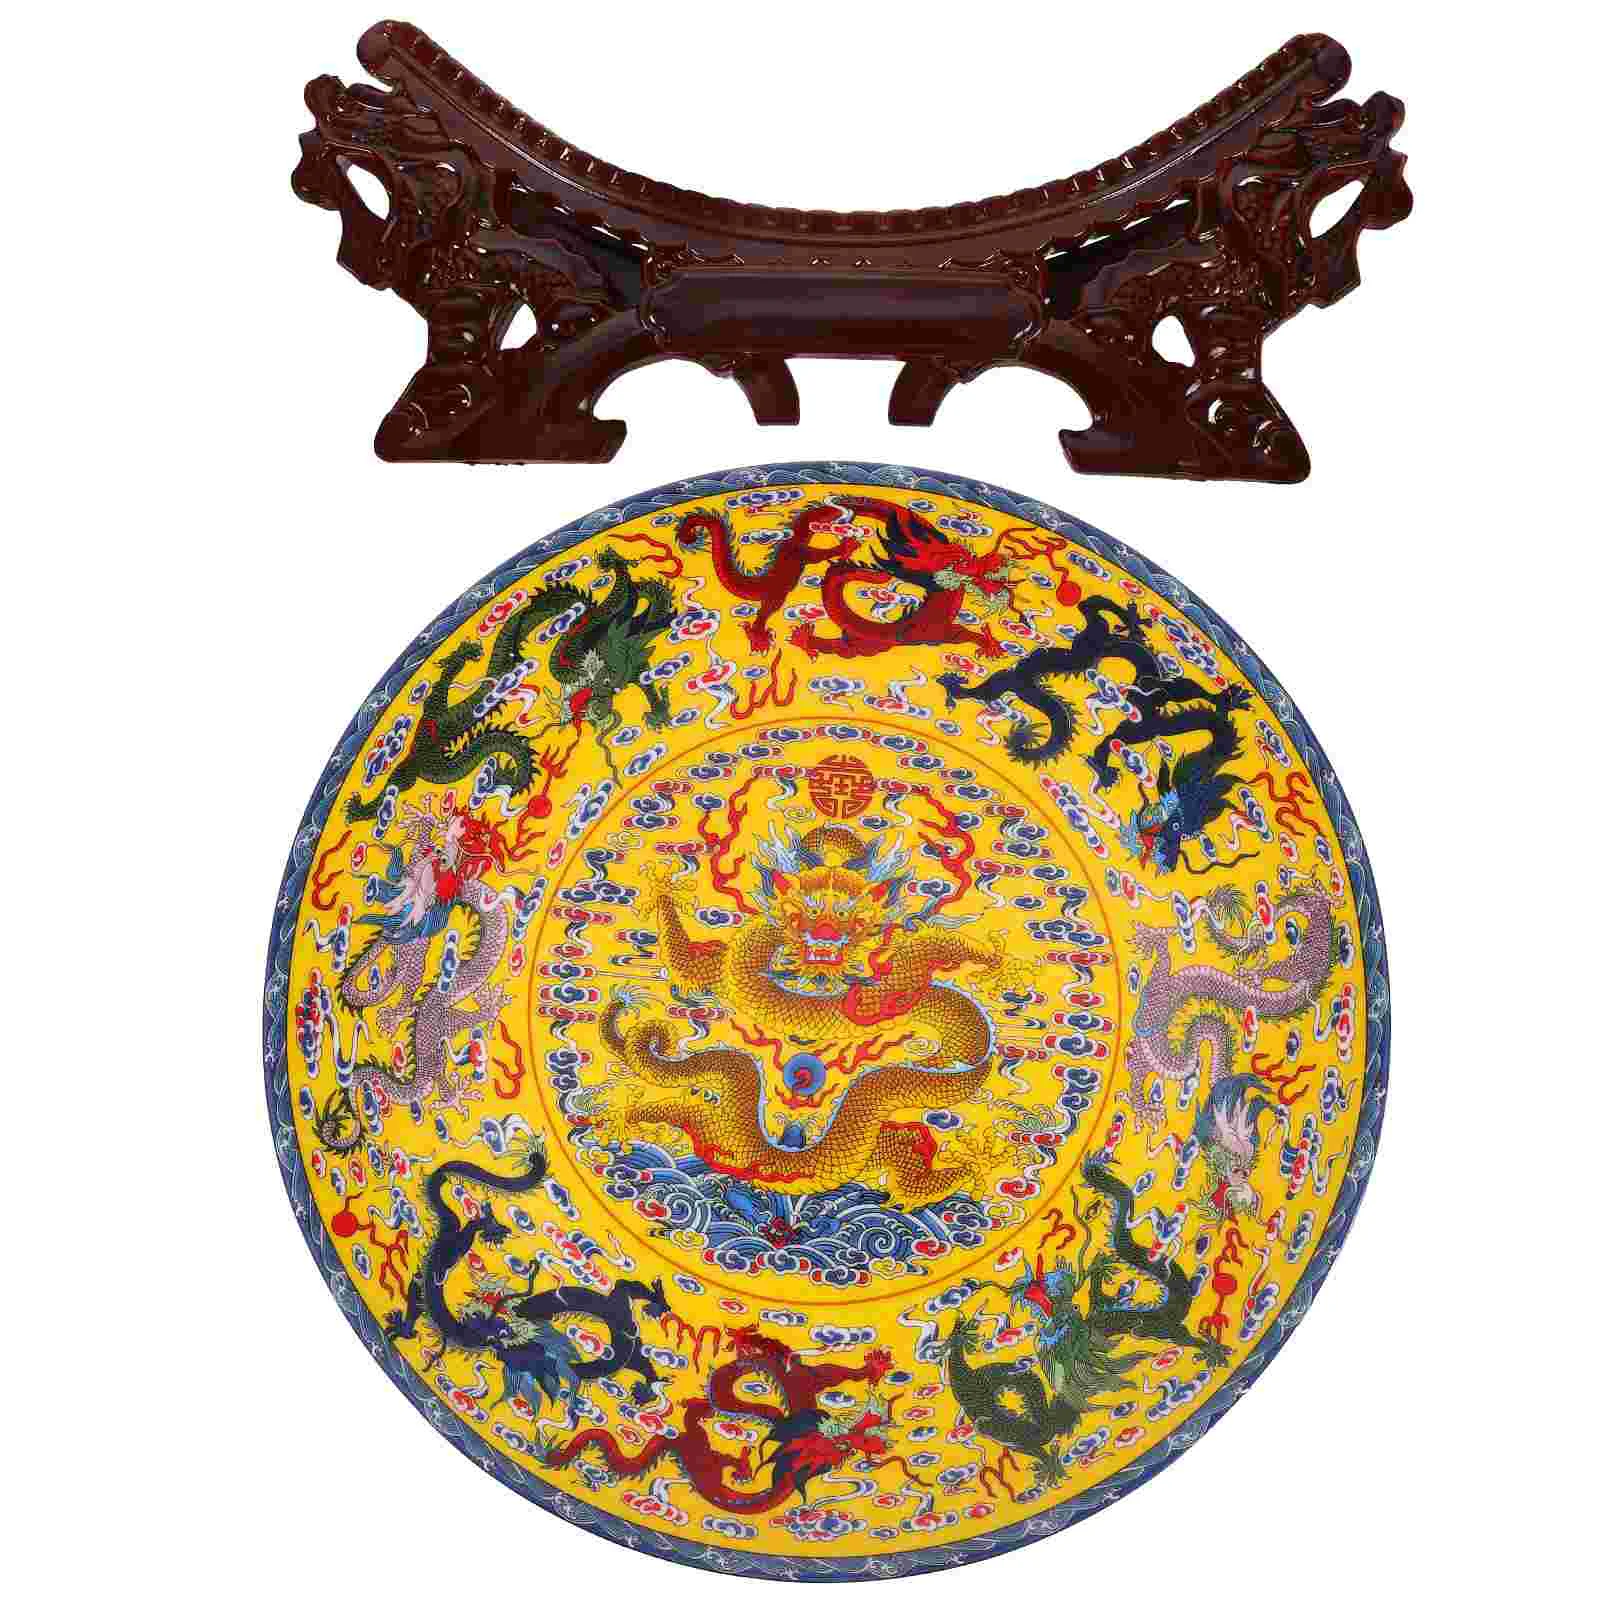 

Decorative Ceramic Plate Tabletop Ceramic Ornament Artwork Handicraft